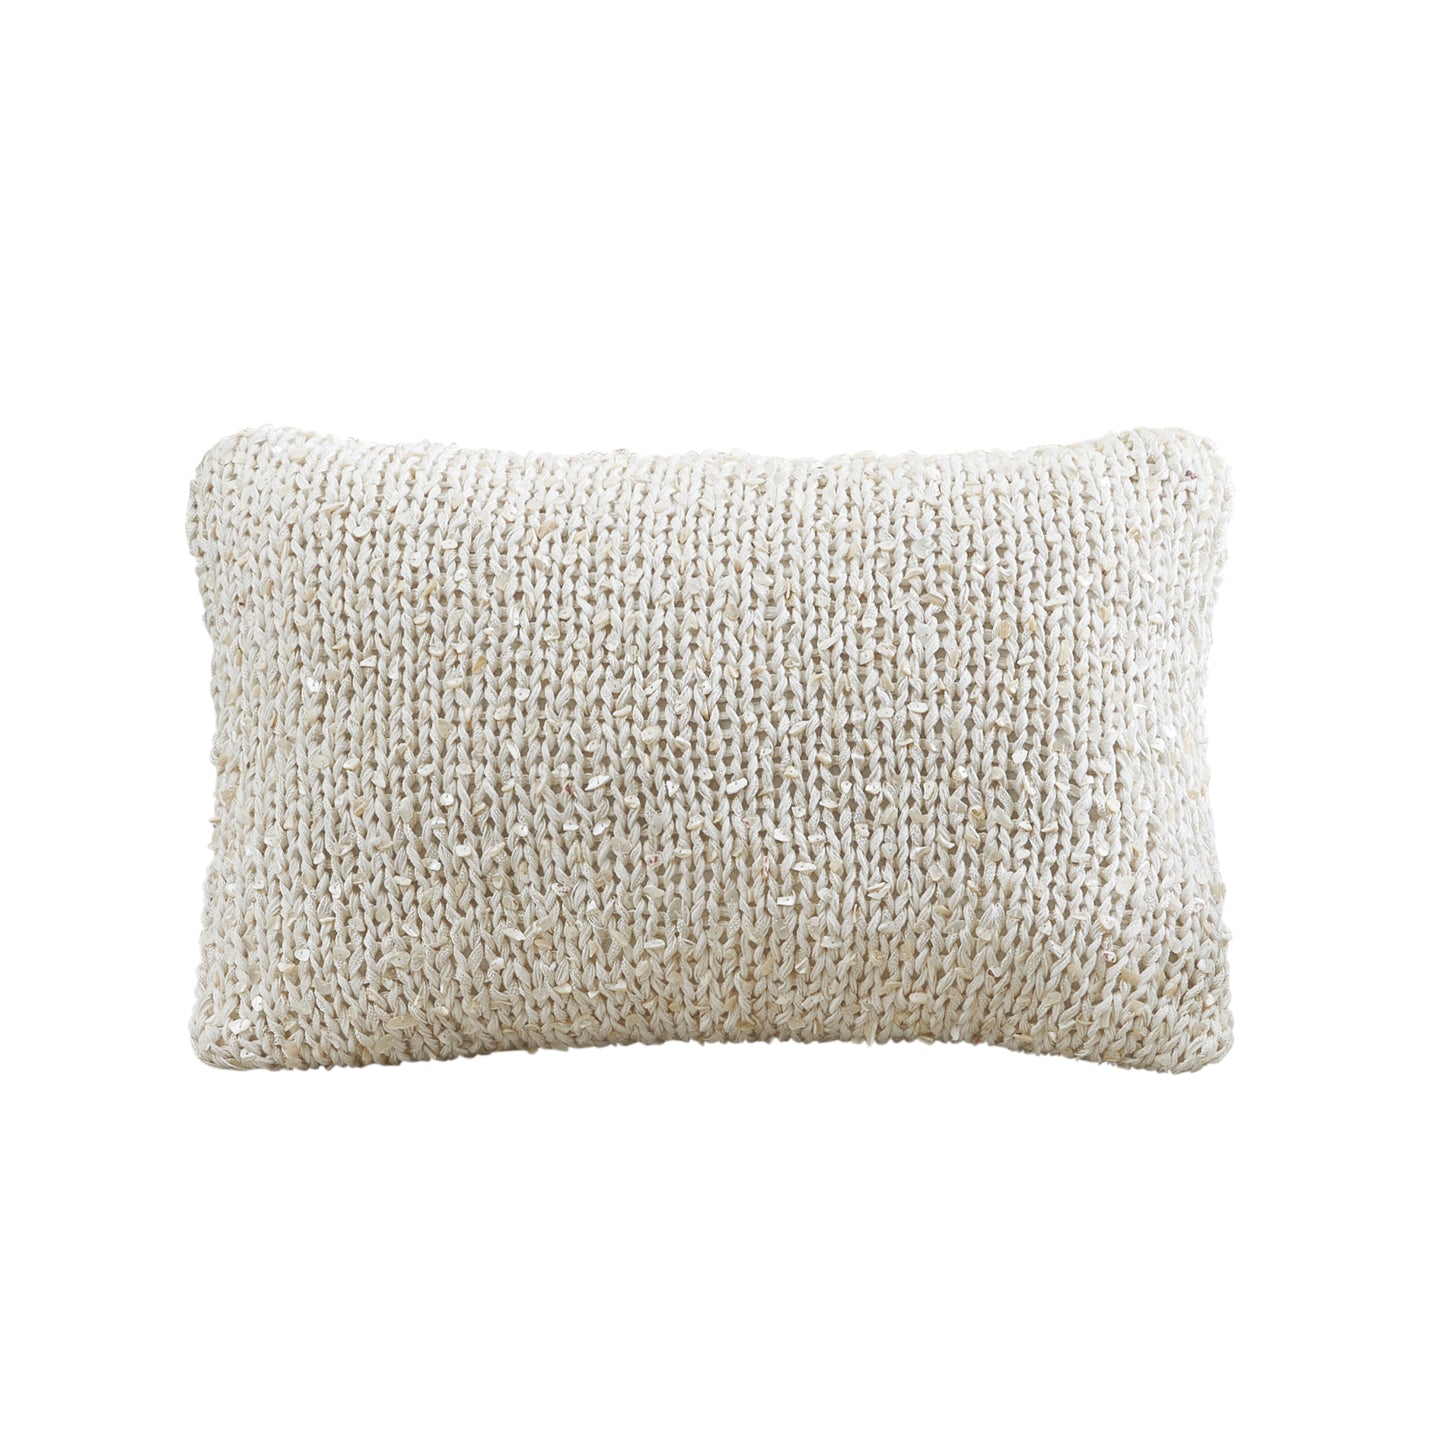 Michael Aram Braided Texture Dec Pillow Ivory